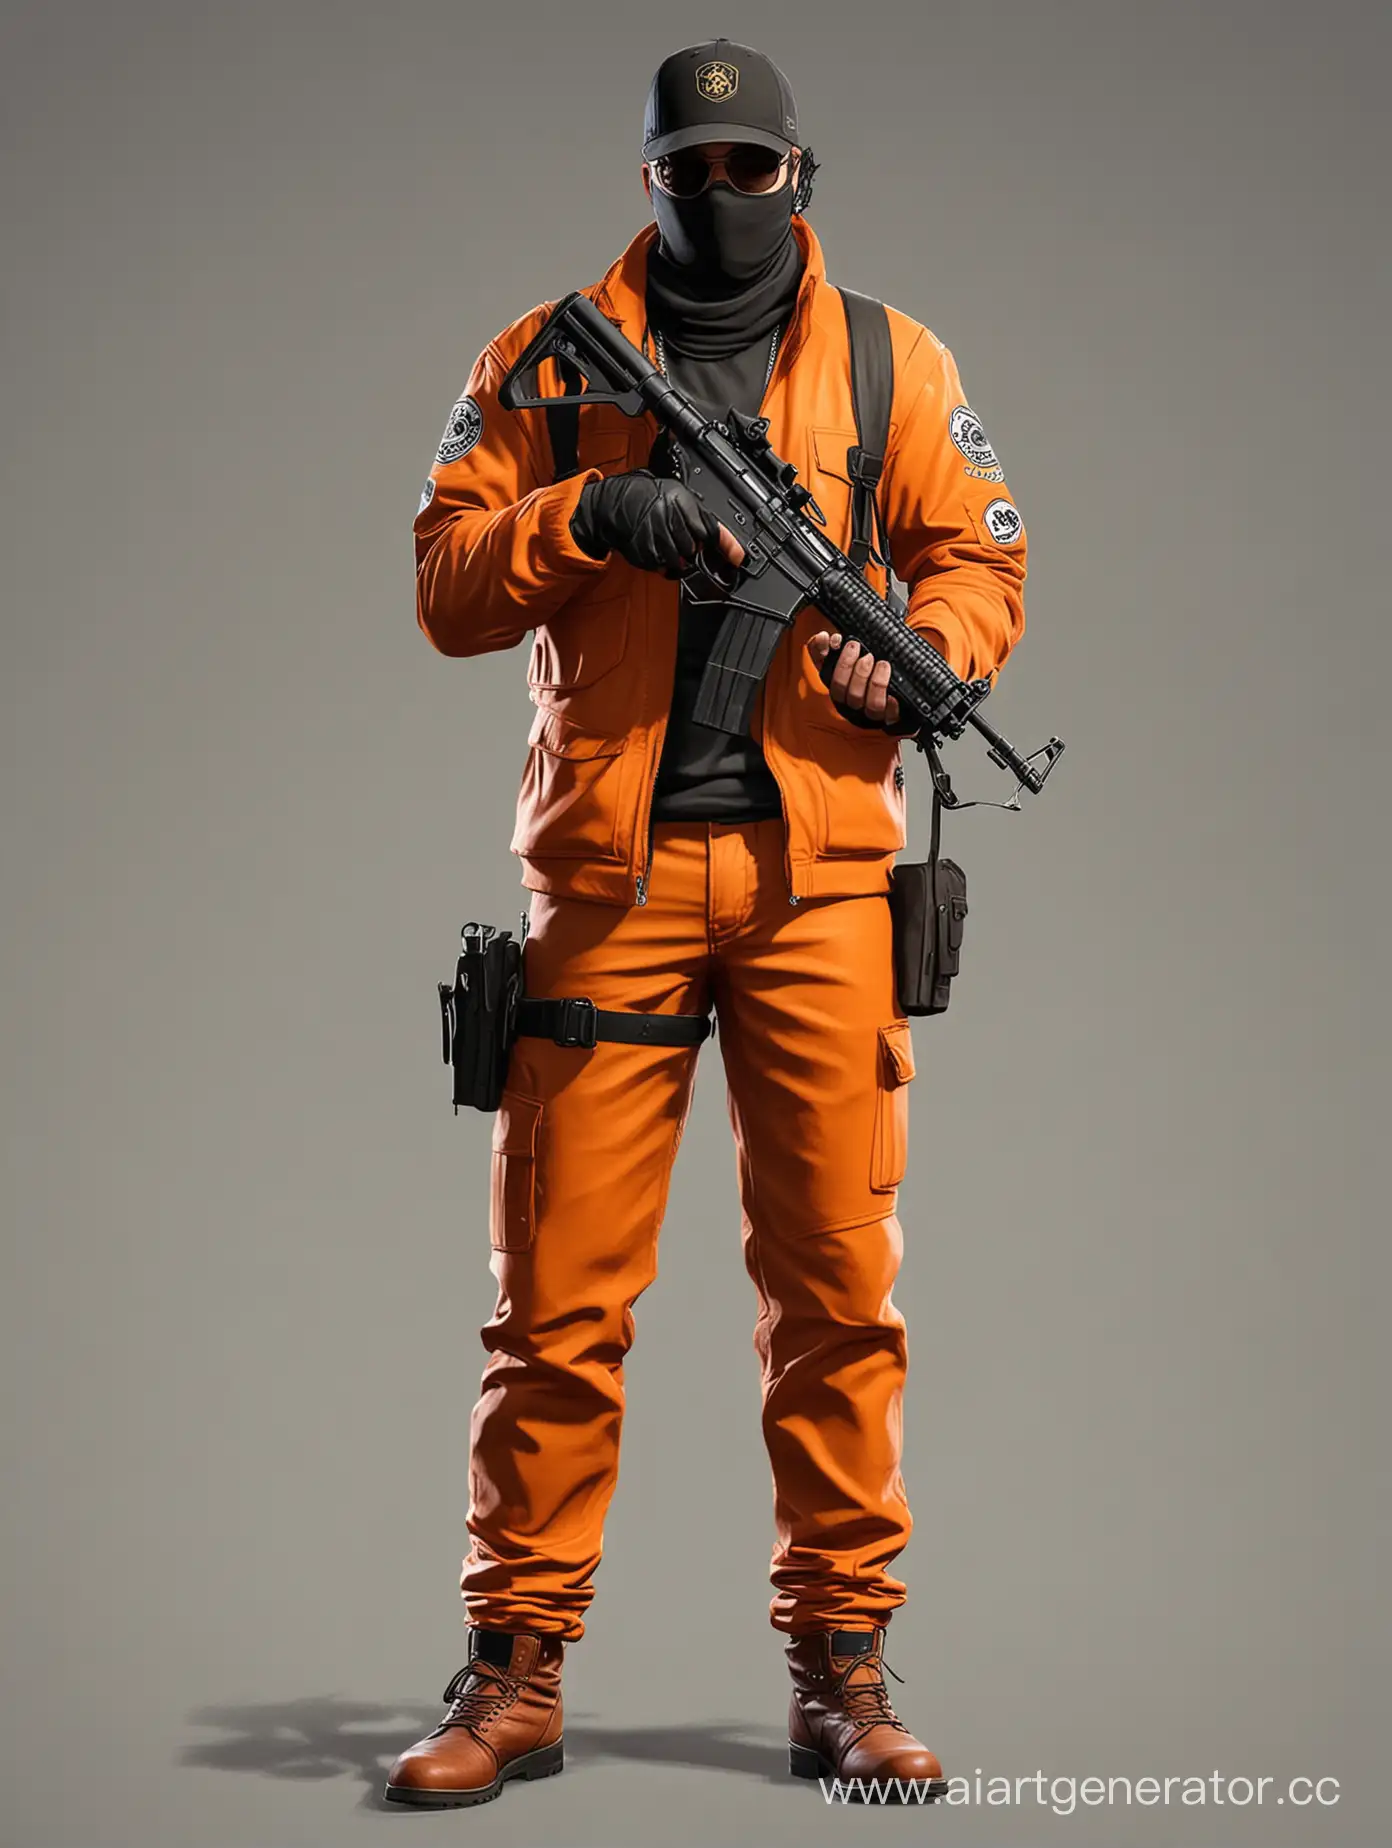 Dynamic-GTA-5-Bandit-in-Vibrant-Orange-Outfit-Wielding-Weapon